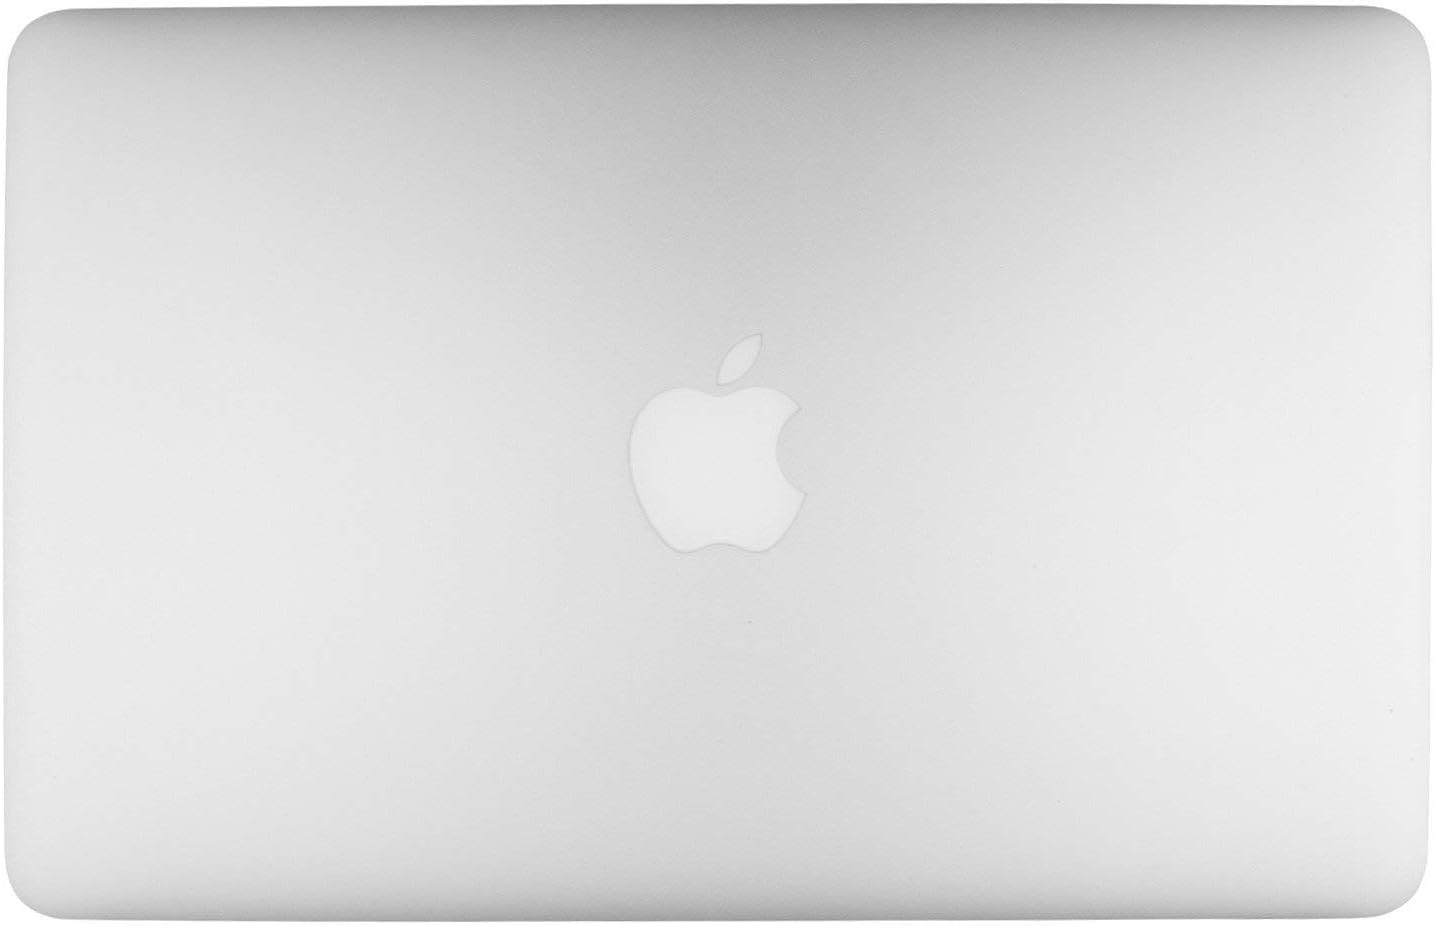 Apple MacBook Air with Intel Core i5, 1.6GHz, (13-inch, 4GB,128GB SSD) - Silver (Renewed)